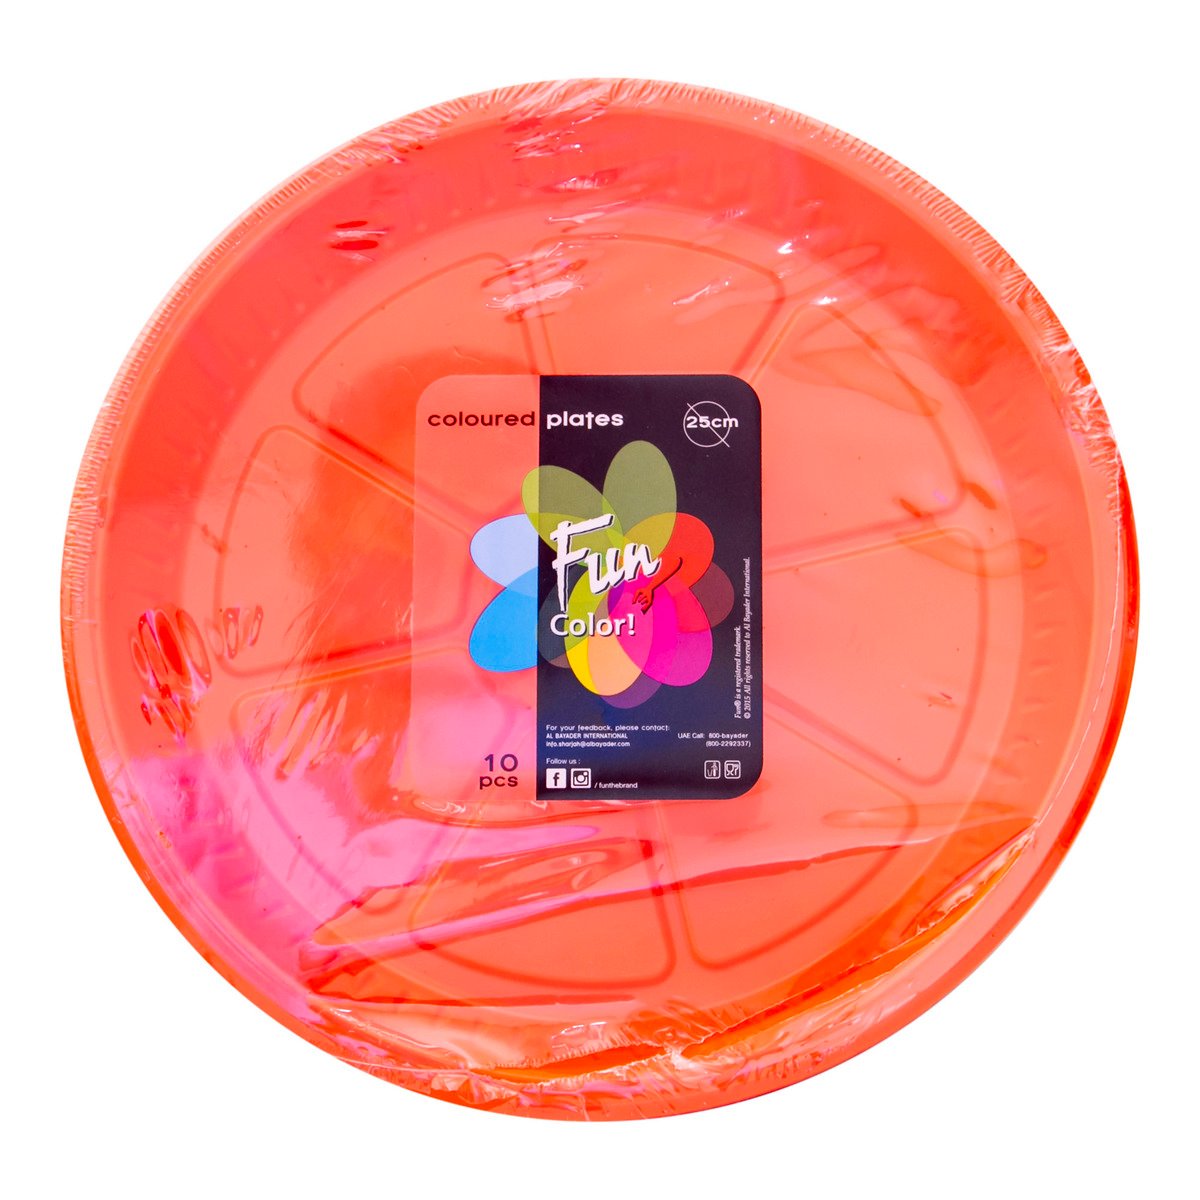 Fun Coloured Plates Orange Size 25cm 10pcs